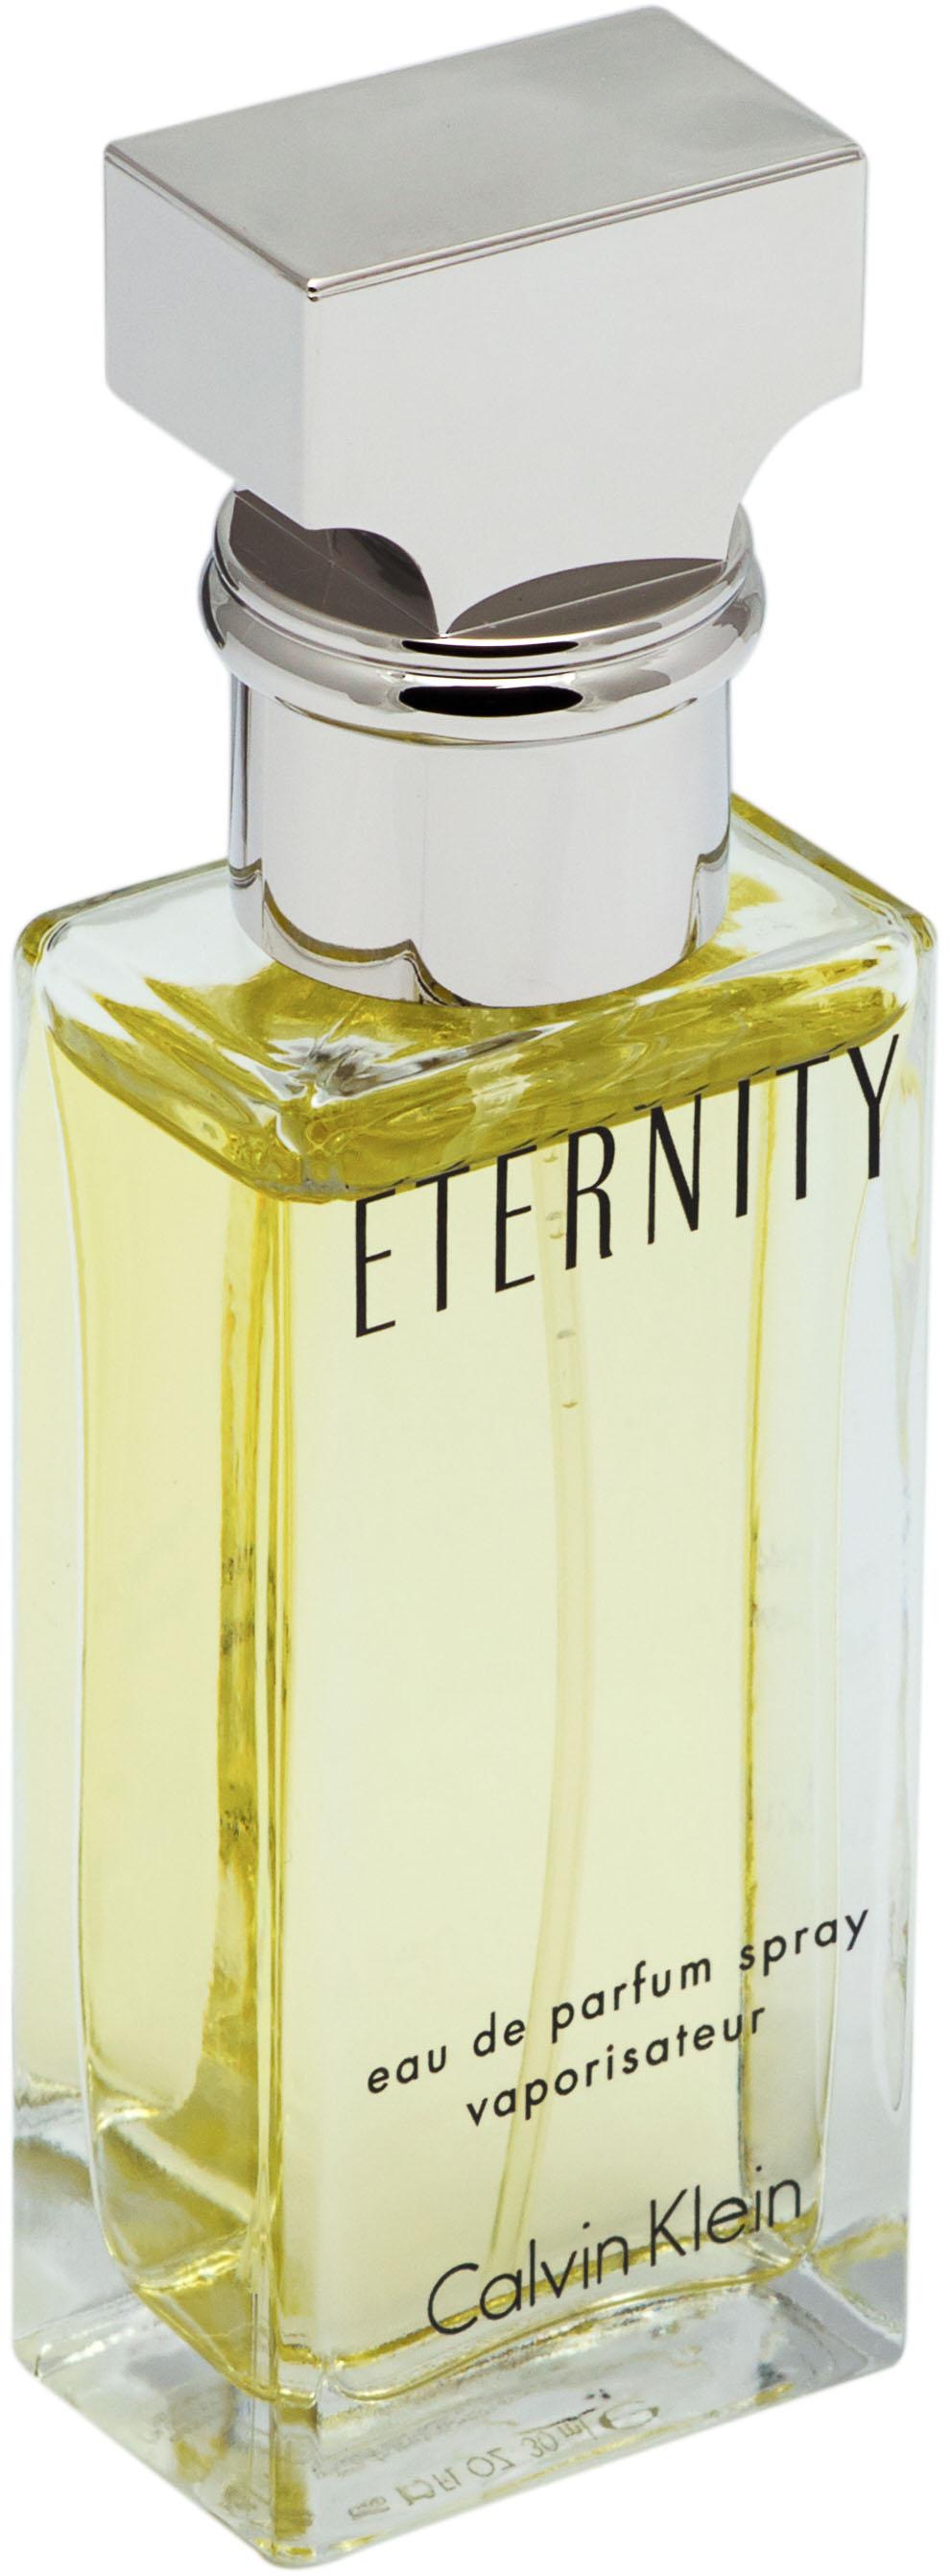 Calvin Klein Duft-Set »Eternity«, (2 tlg.) bei OTTO